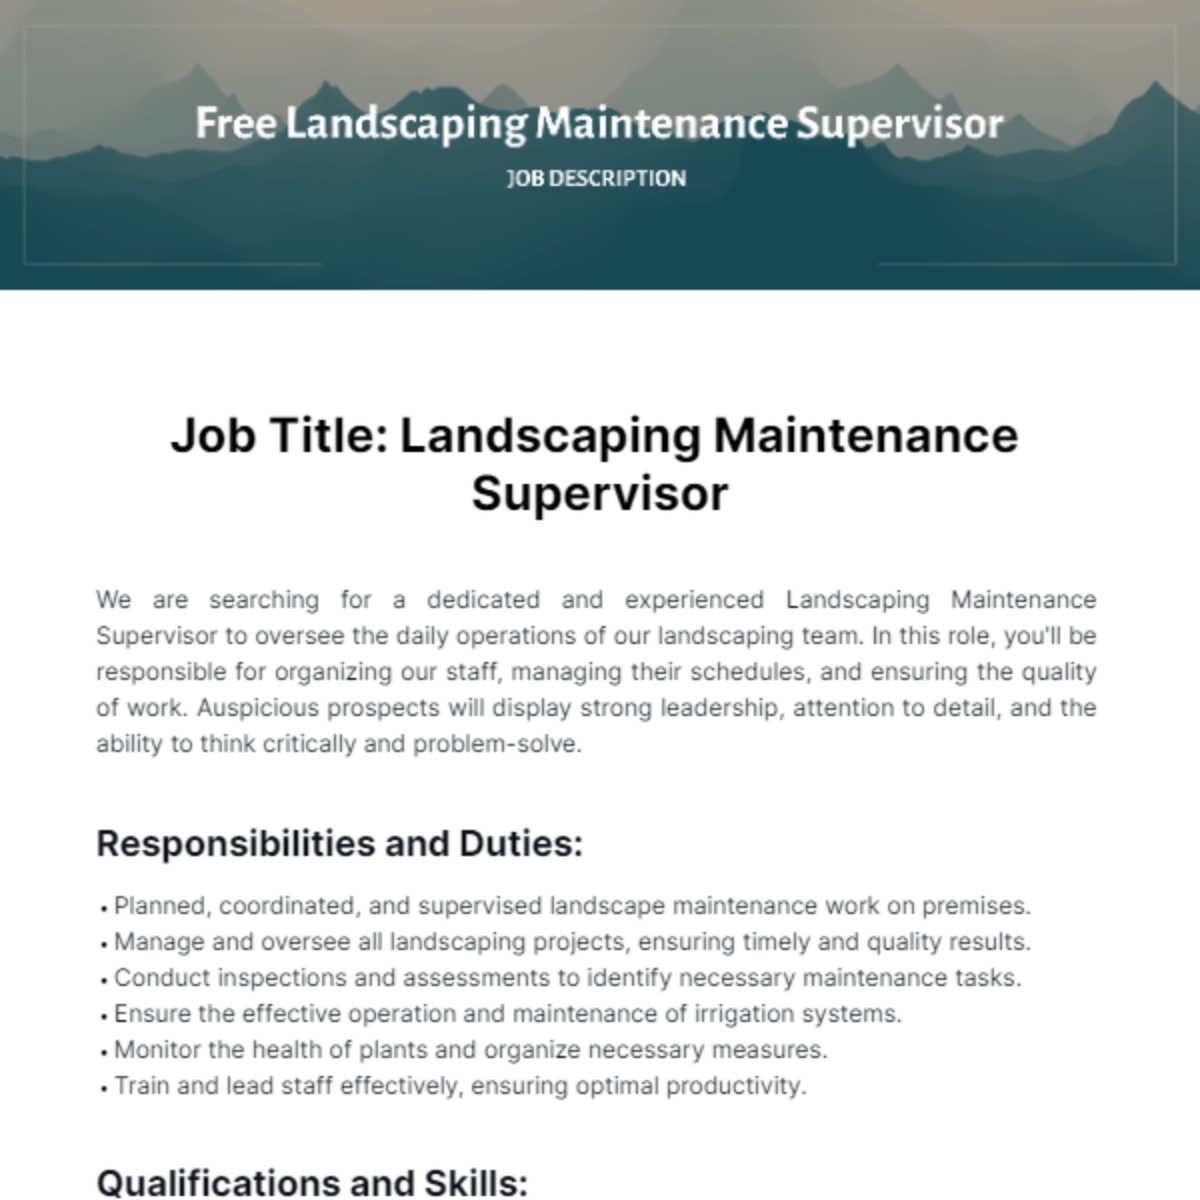 Free Landscaping Maintenance Supervisor Job Description Template